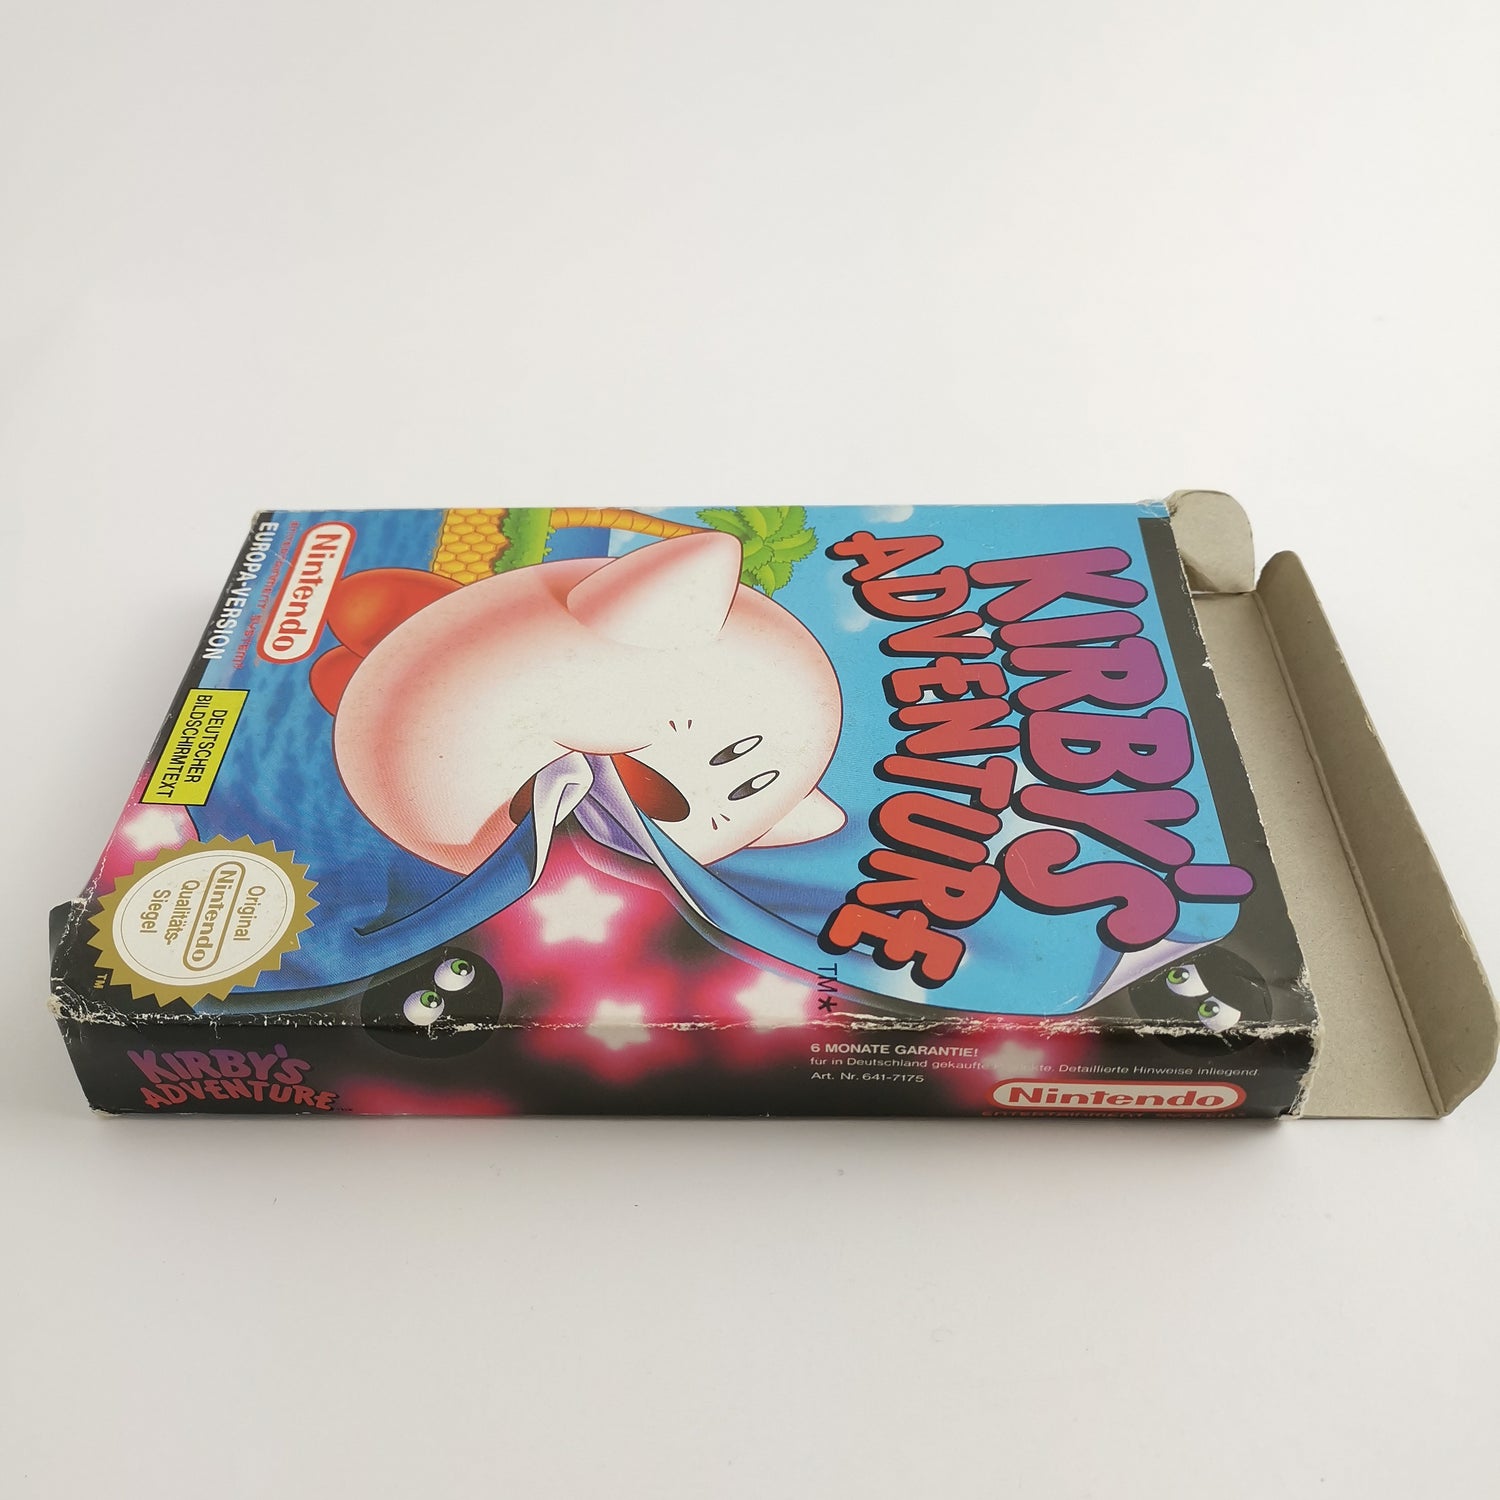 Nintendo Entertainment System Spiel : Kirbys Adventure | NES - OVP NOE